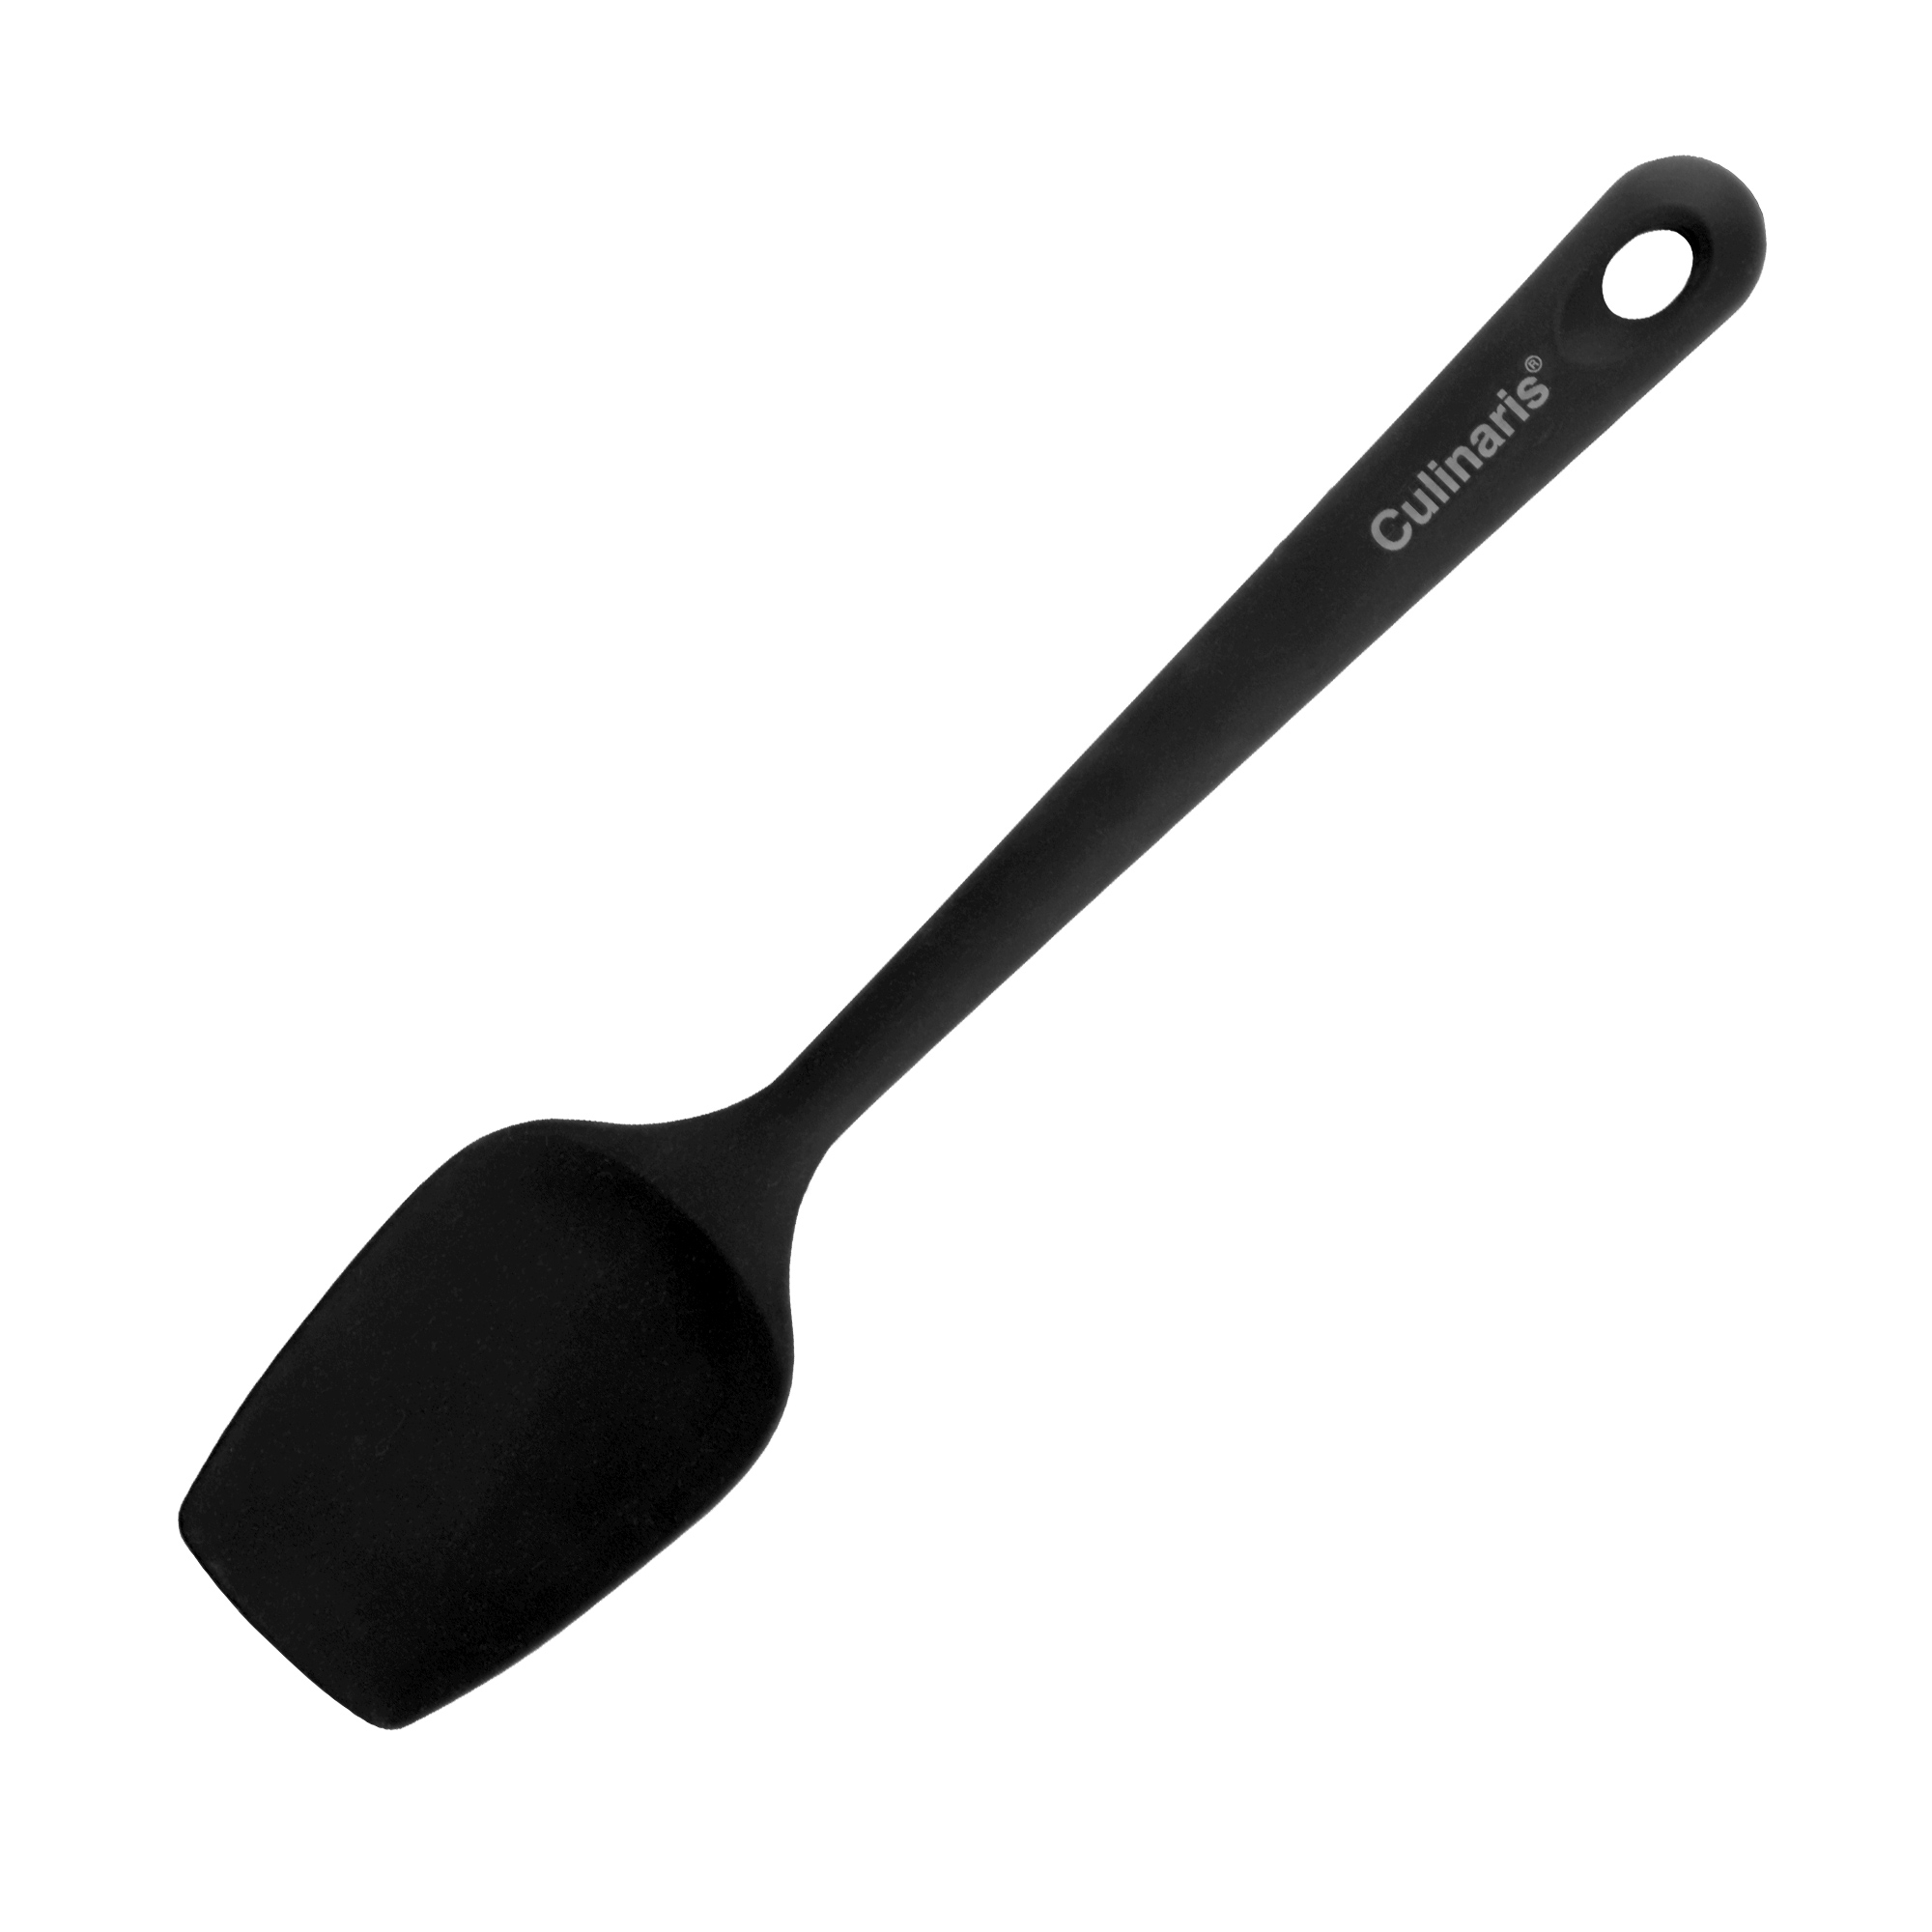 Culinaris Silikontools - Flex Spoon